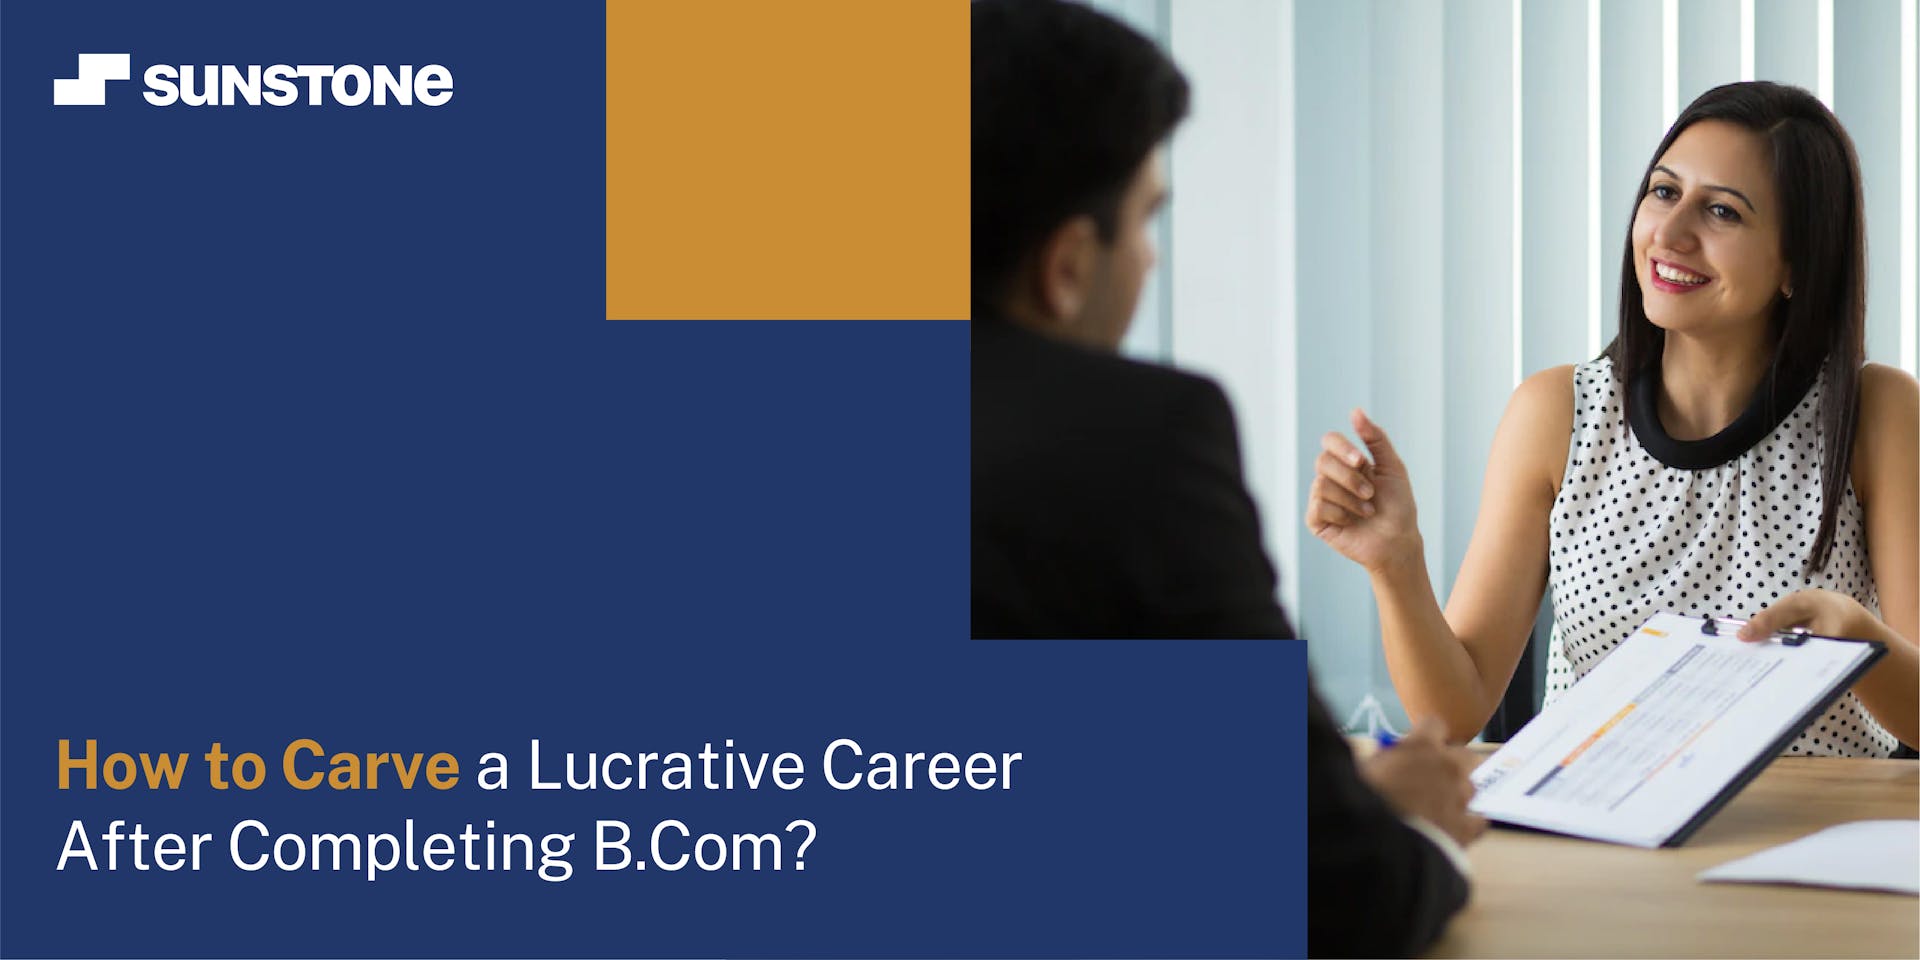 How to Carve a Lucrative Career after B.Com?